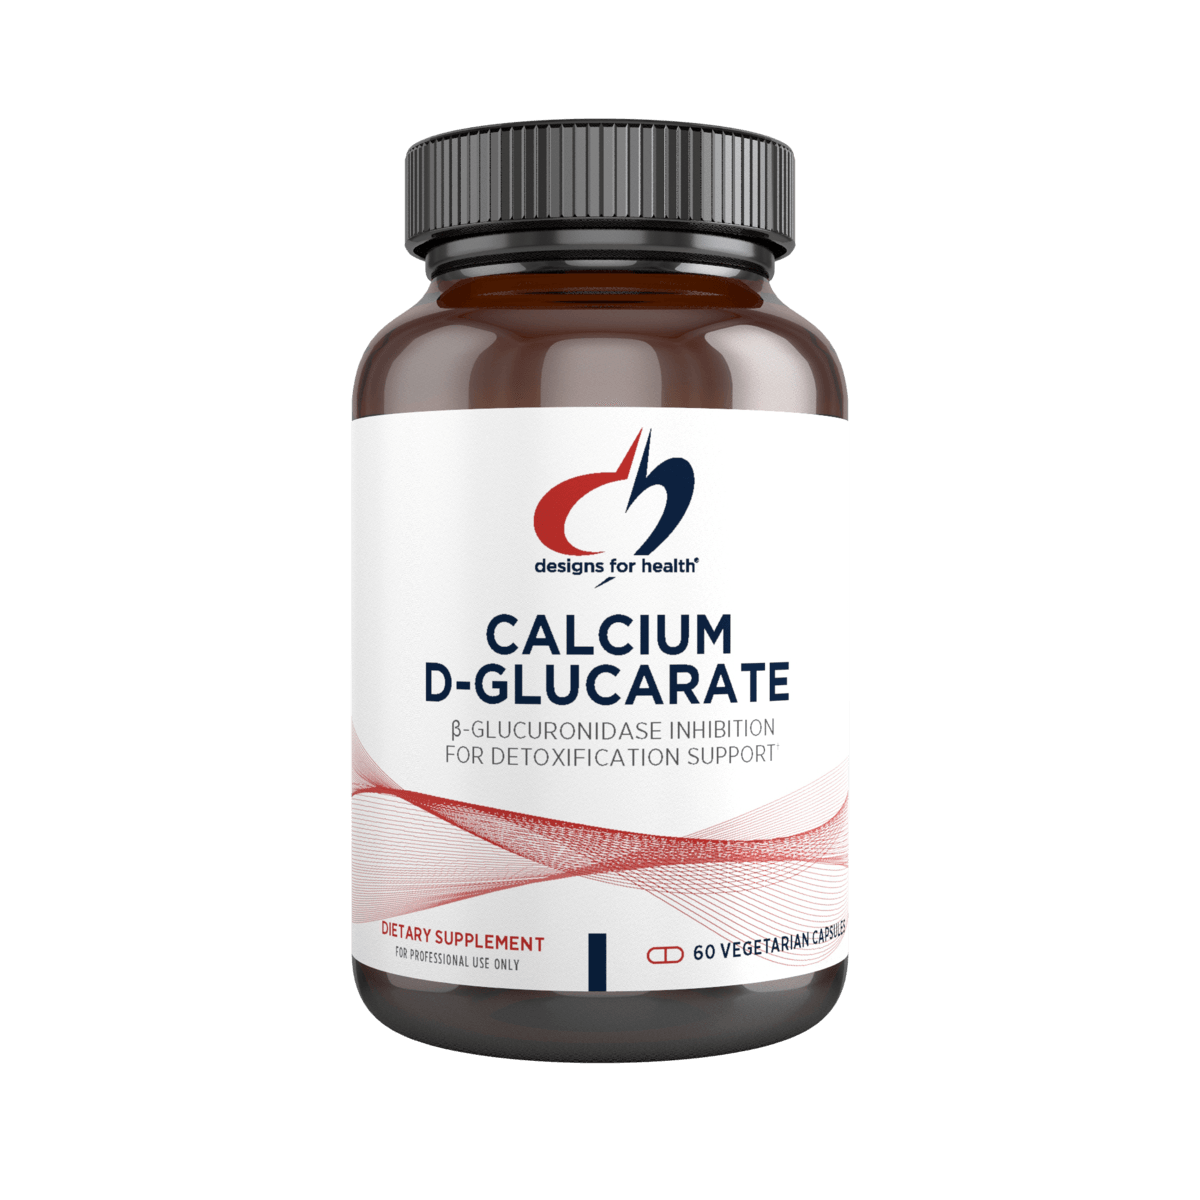 Calcium D-Glucarate Design for Health (DFH) New Zealand